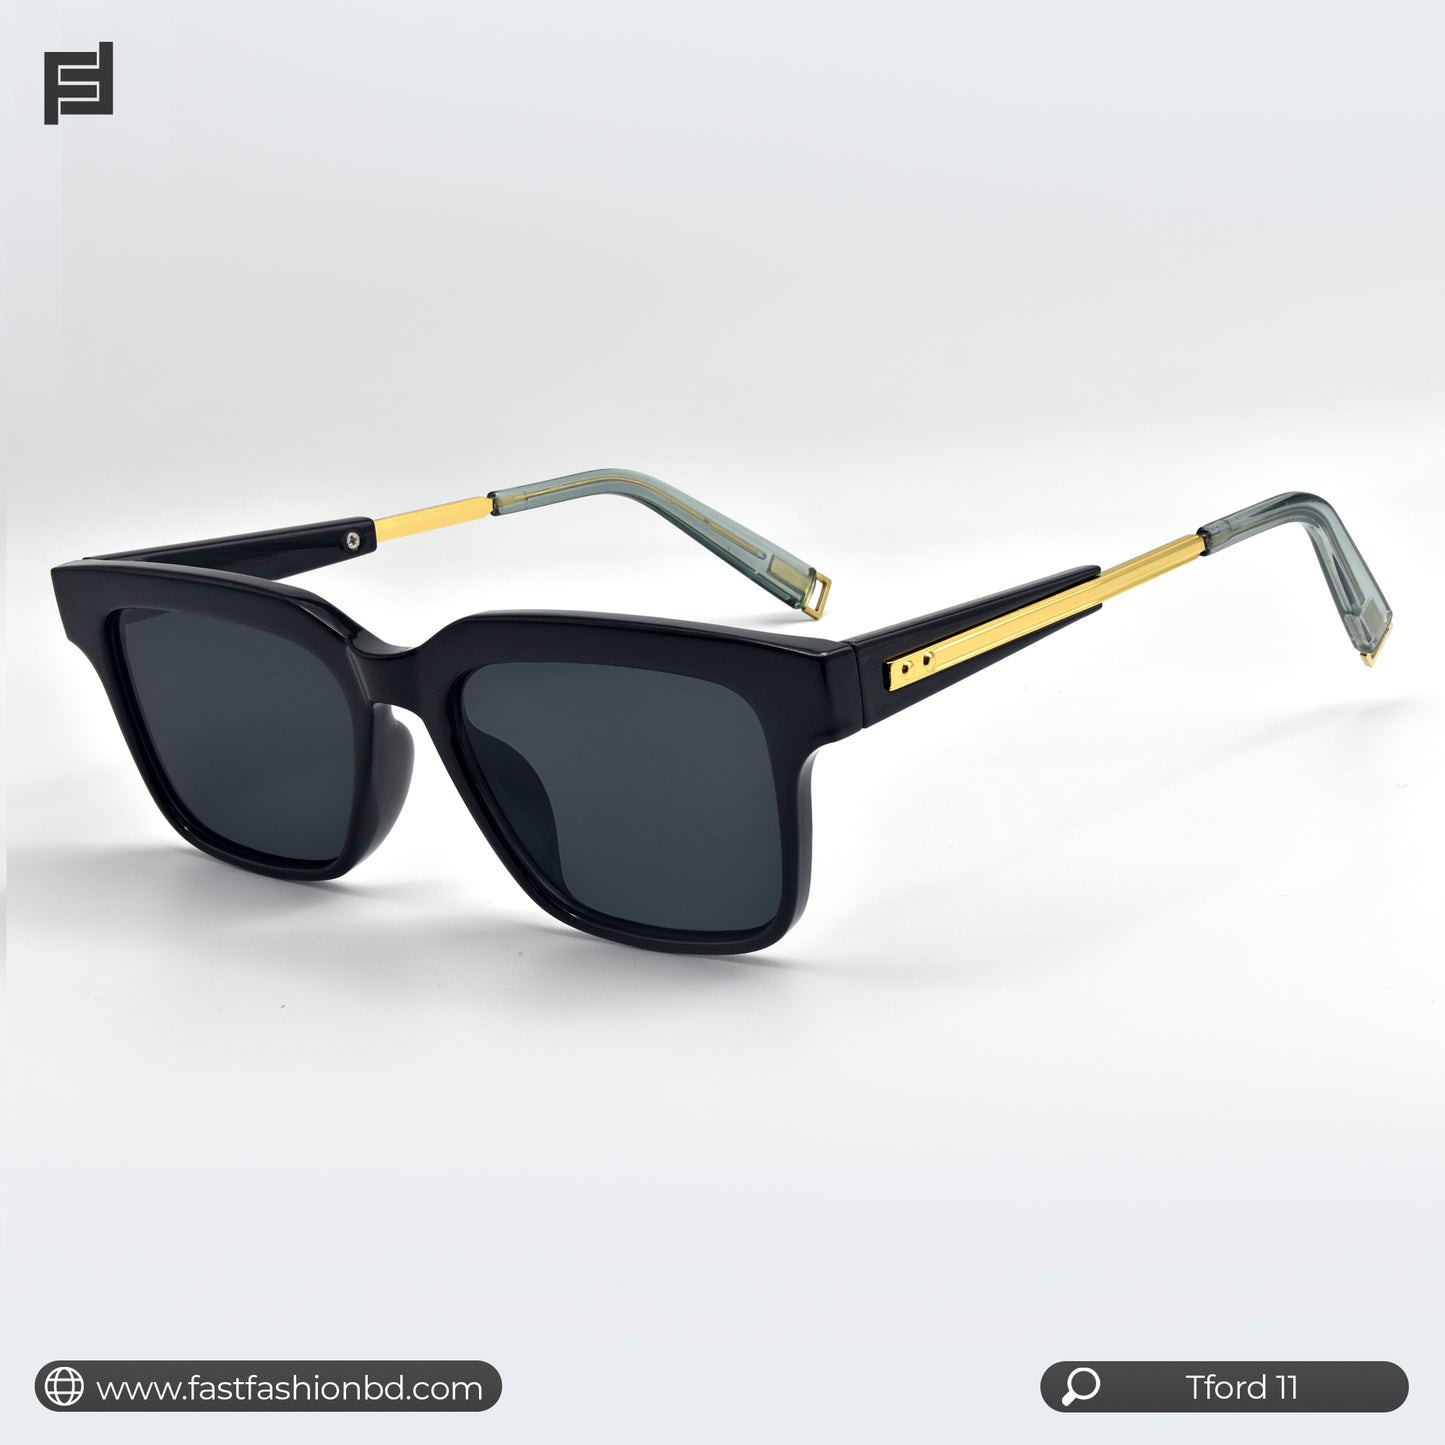 Premium Quality Stylish Wayfarer Shape Sunglass Exclusive | TFord 11